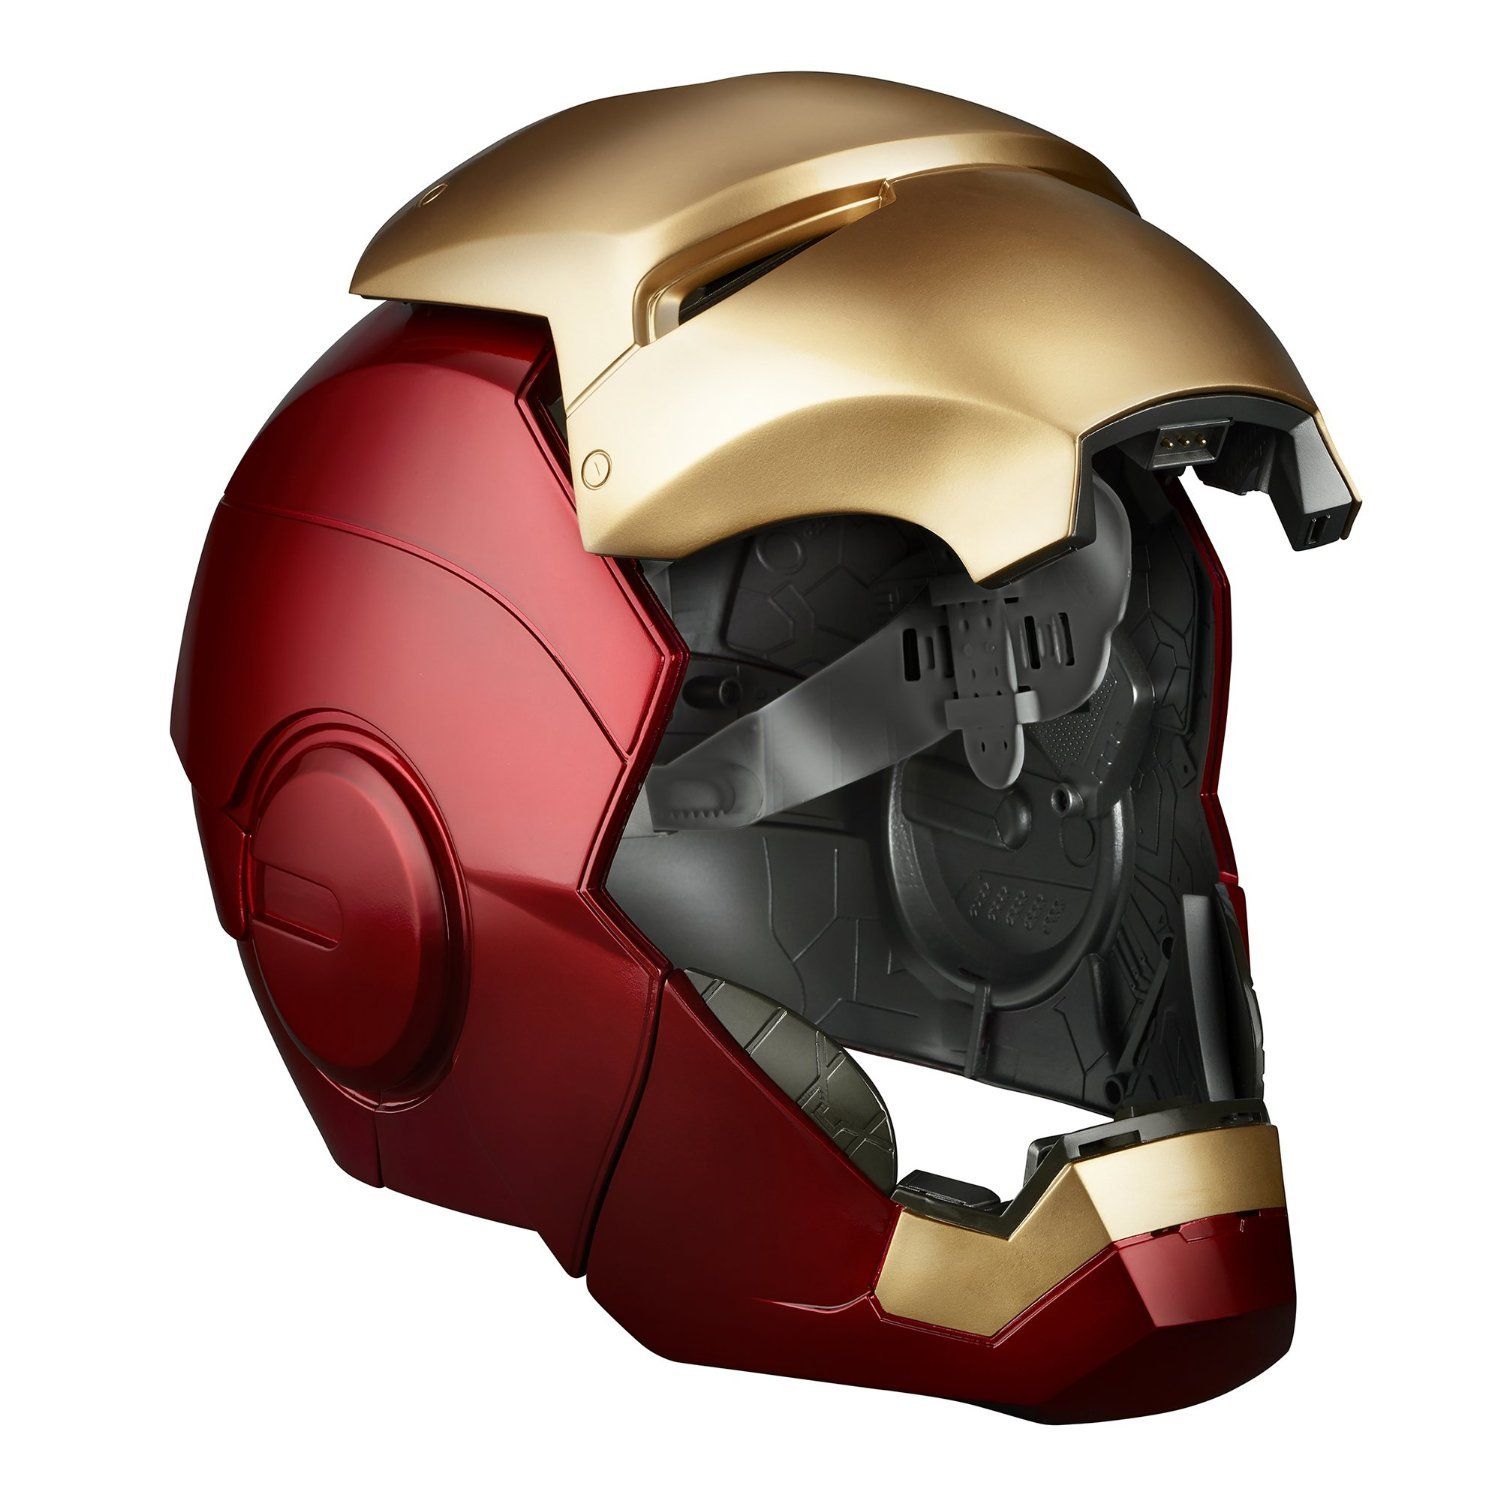 Marvel Legends Iron Man helmet